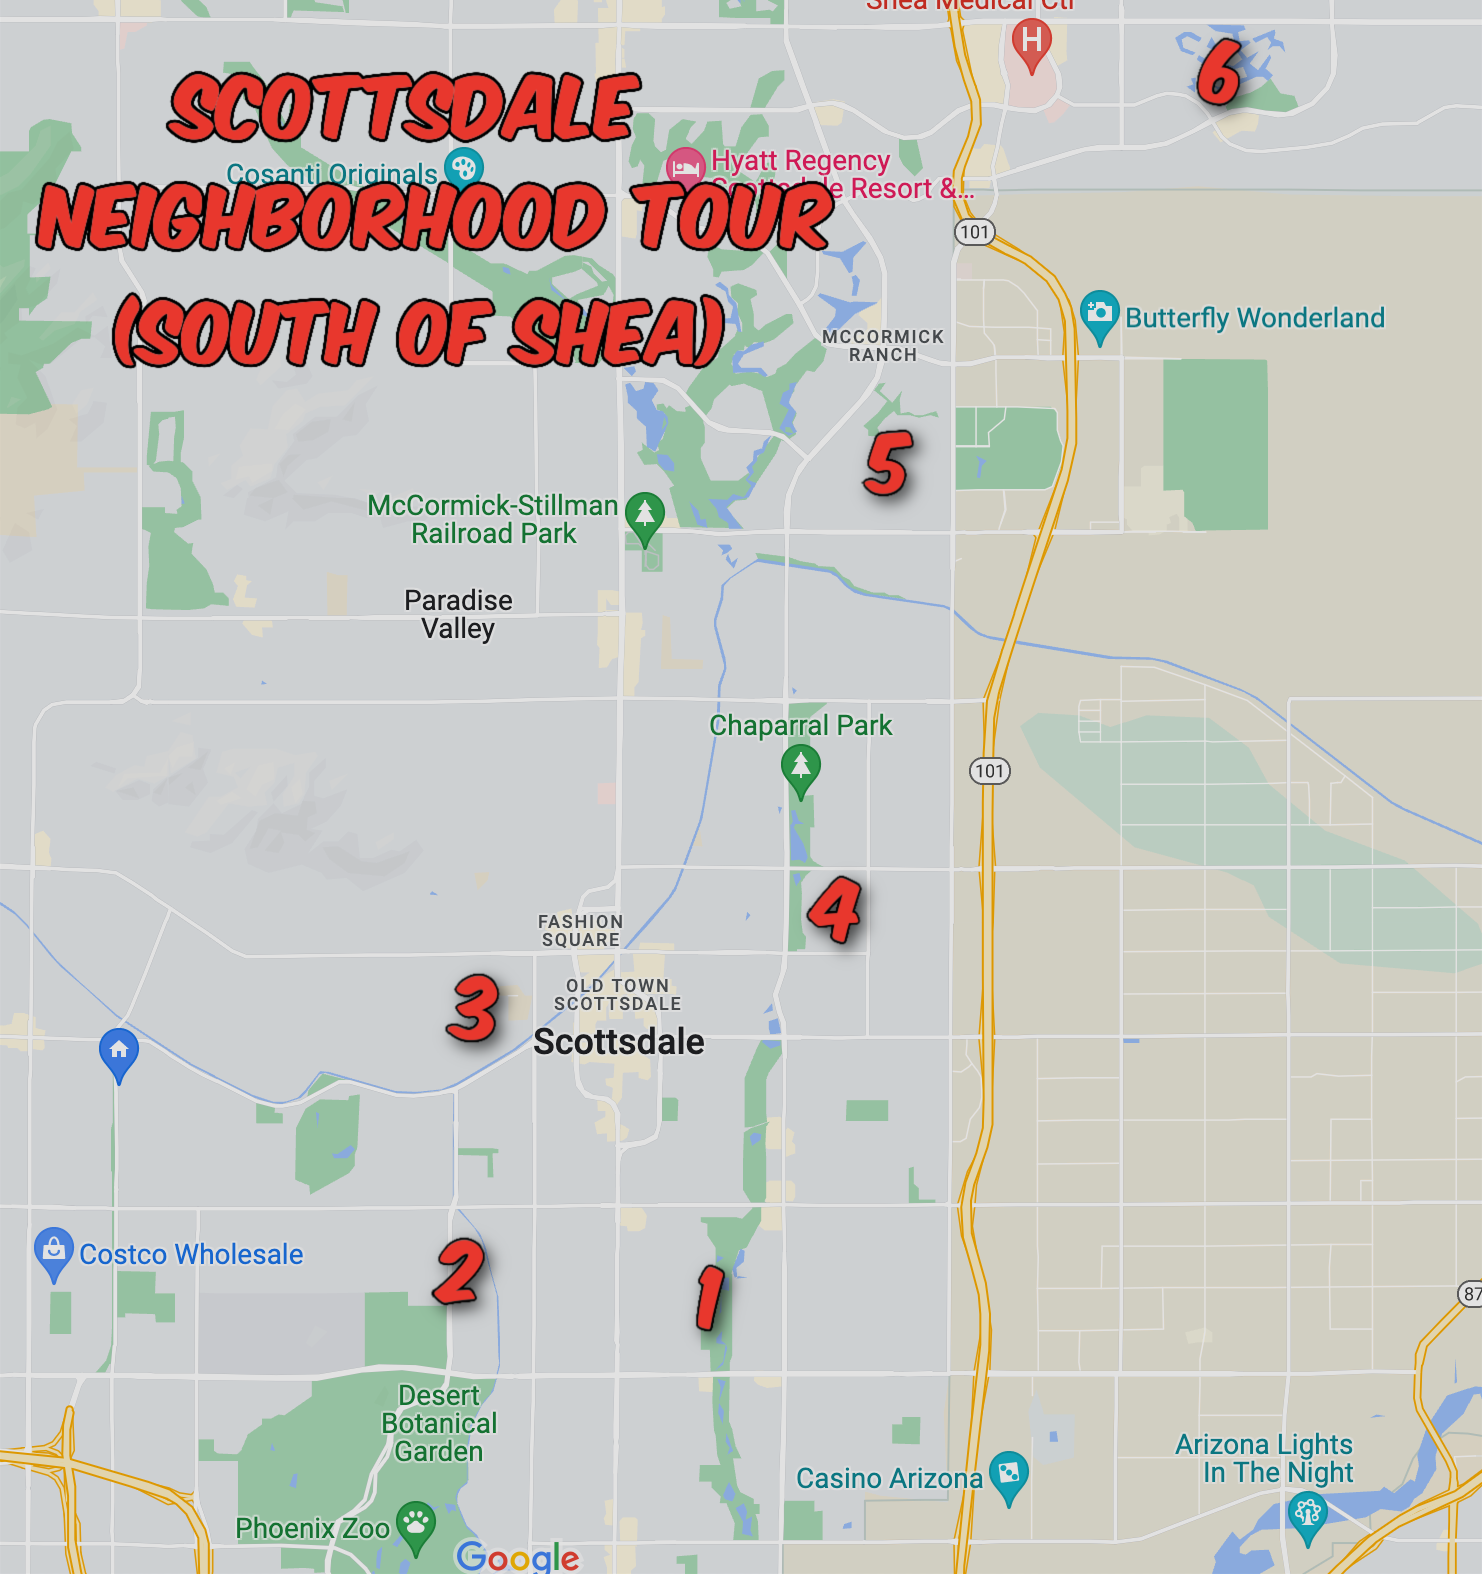 Scottsdale South of Shea blvd Neighborhood tour map.jpg